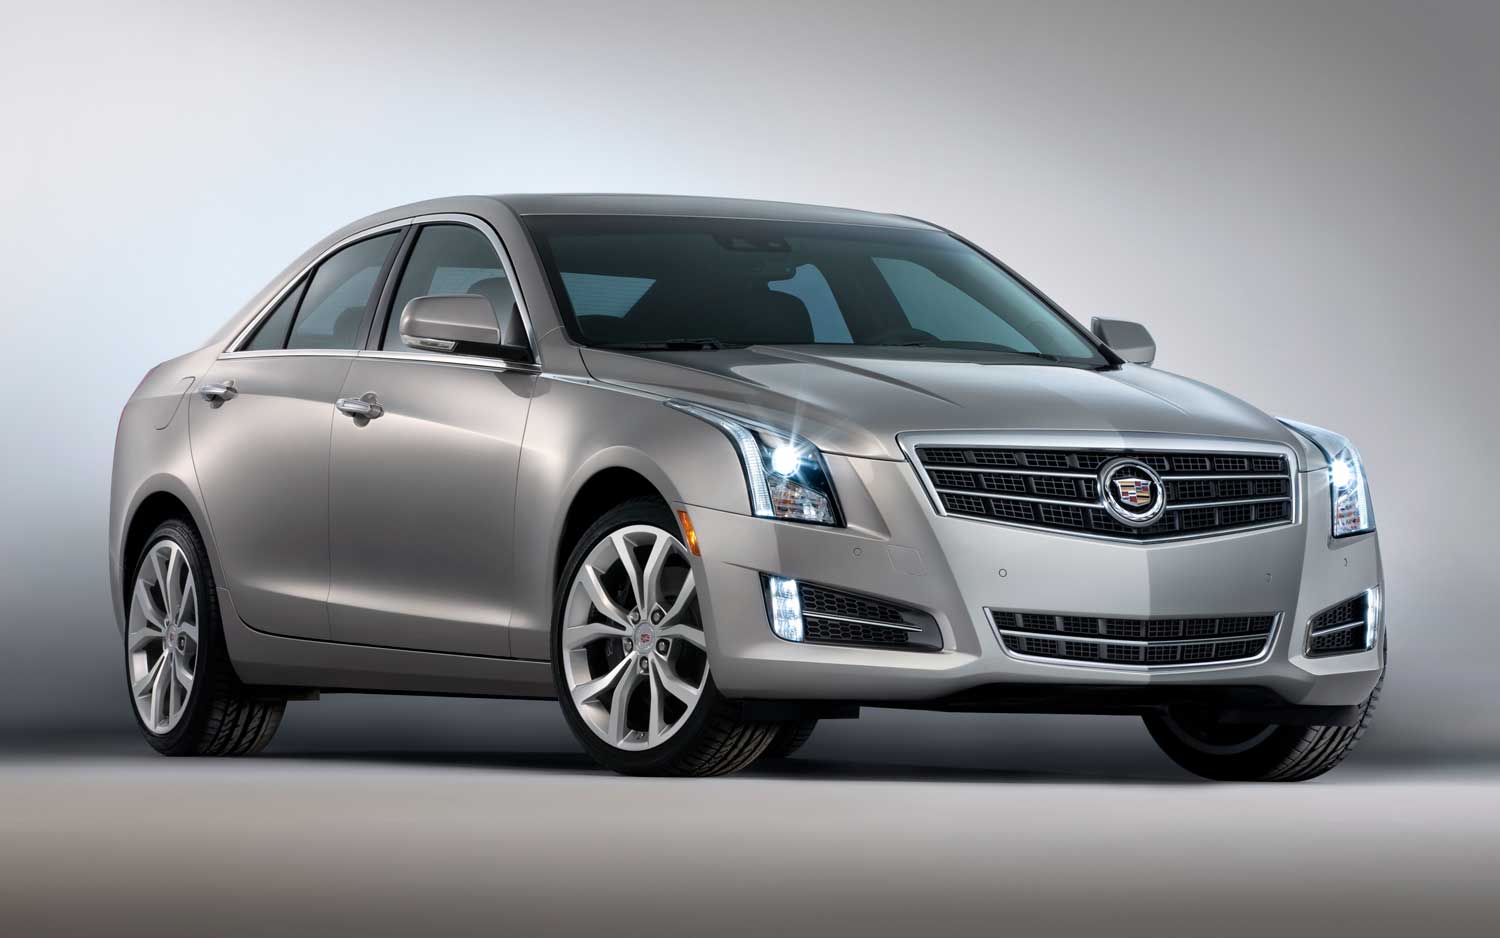 New Car Review: 2013 Cadillac ATS AWD 3.6L